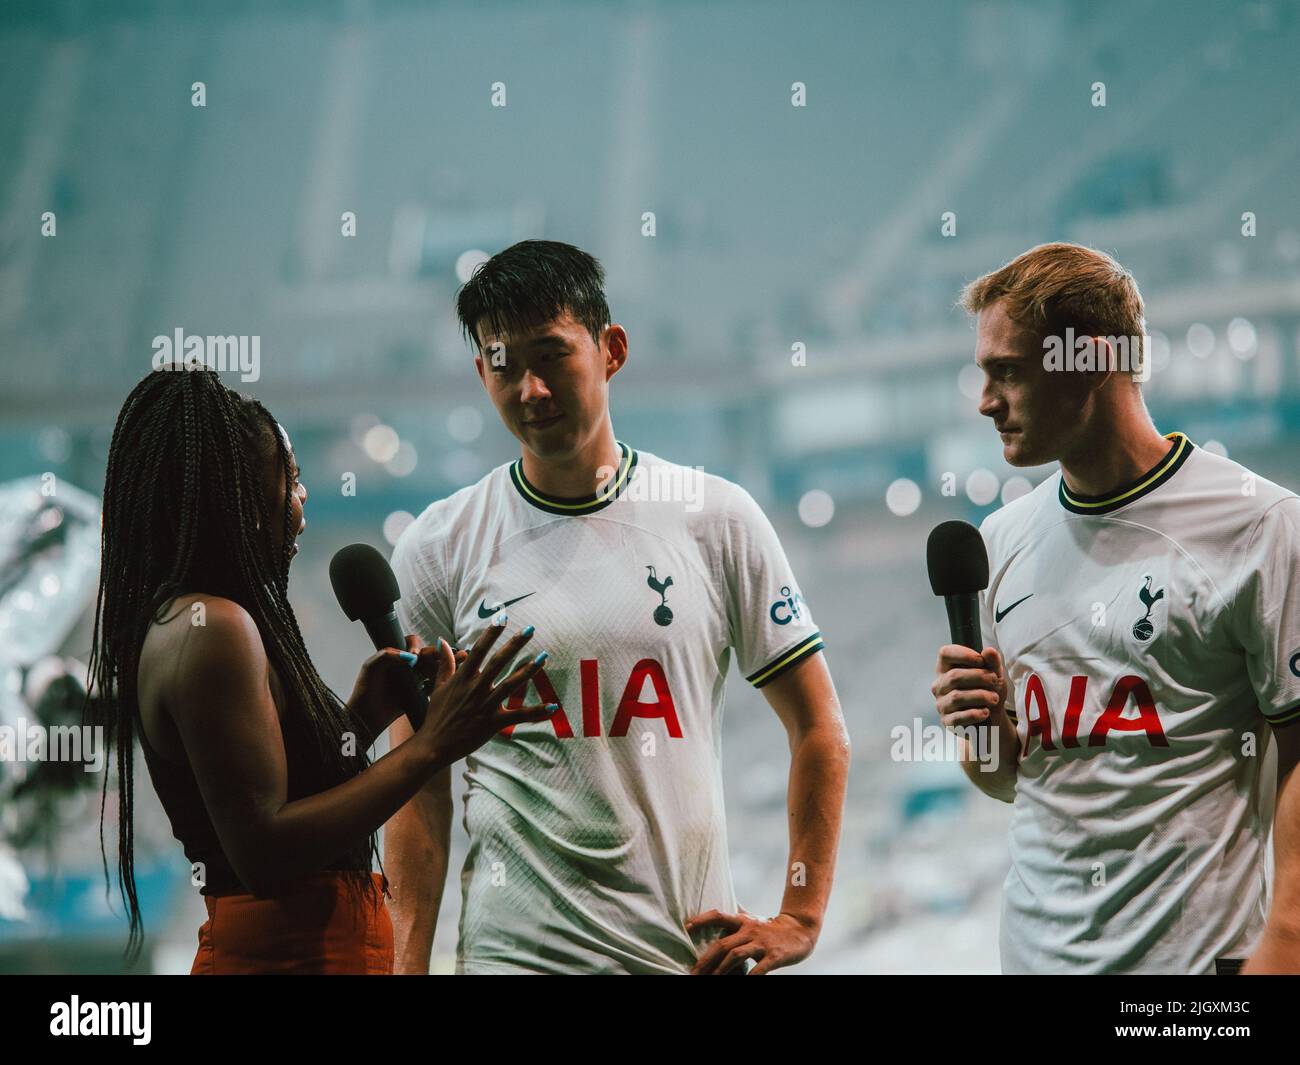 Tottenham Hotspur vs Team K League Stock Photo